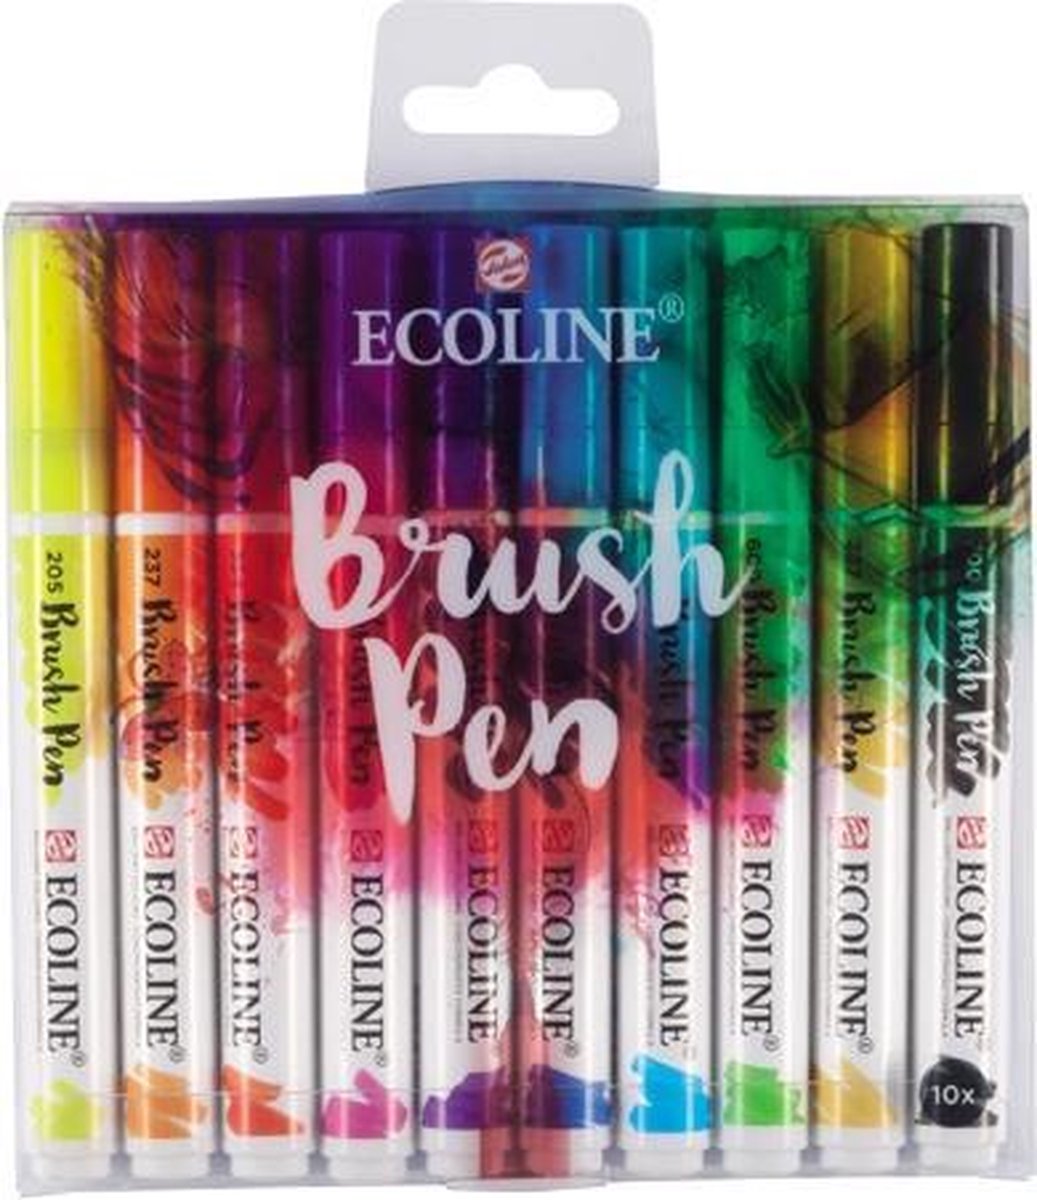 Talens Ecoline Brush Pen - 10 stuks | bol.com